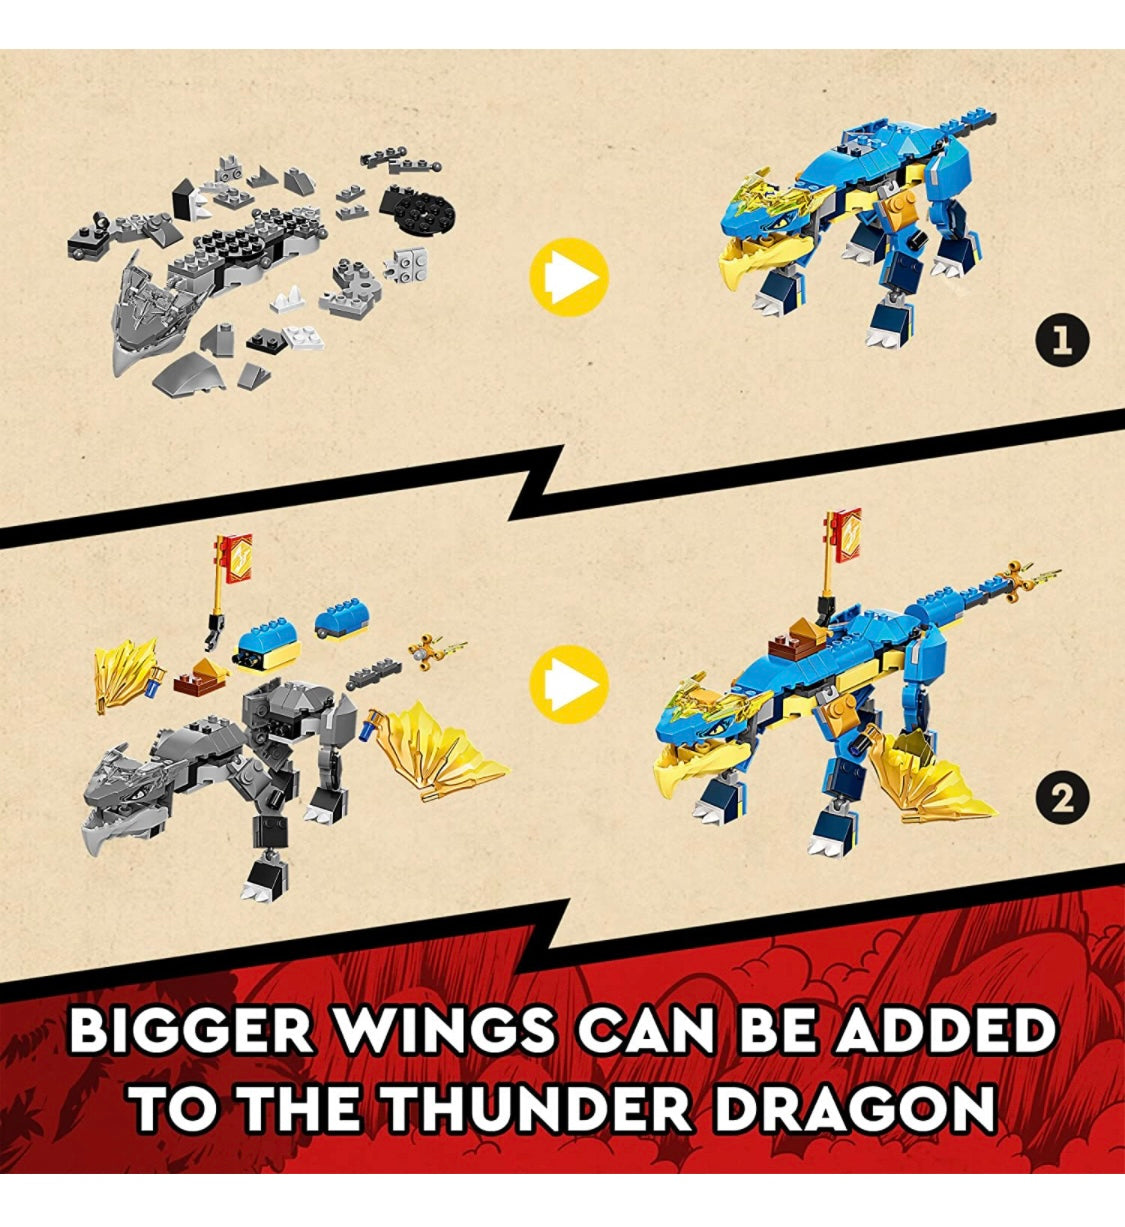 Lego Ninjago Jay’s Thunder Dragon Evo